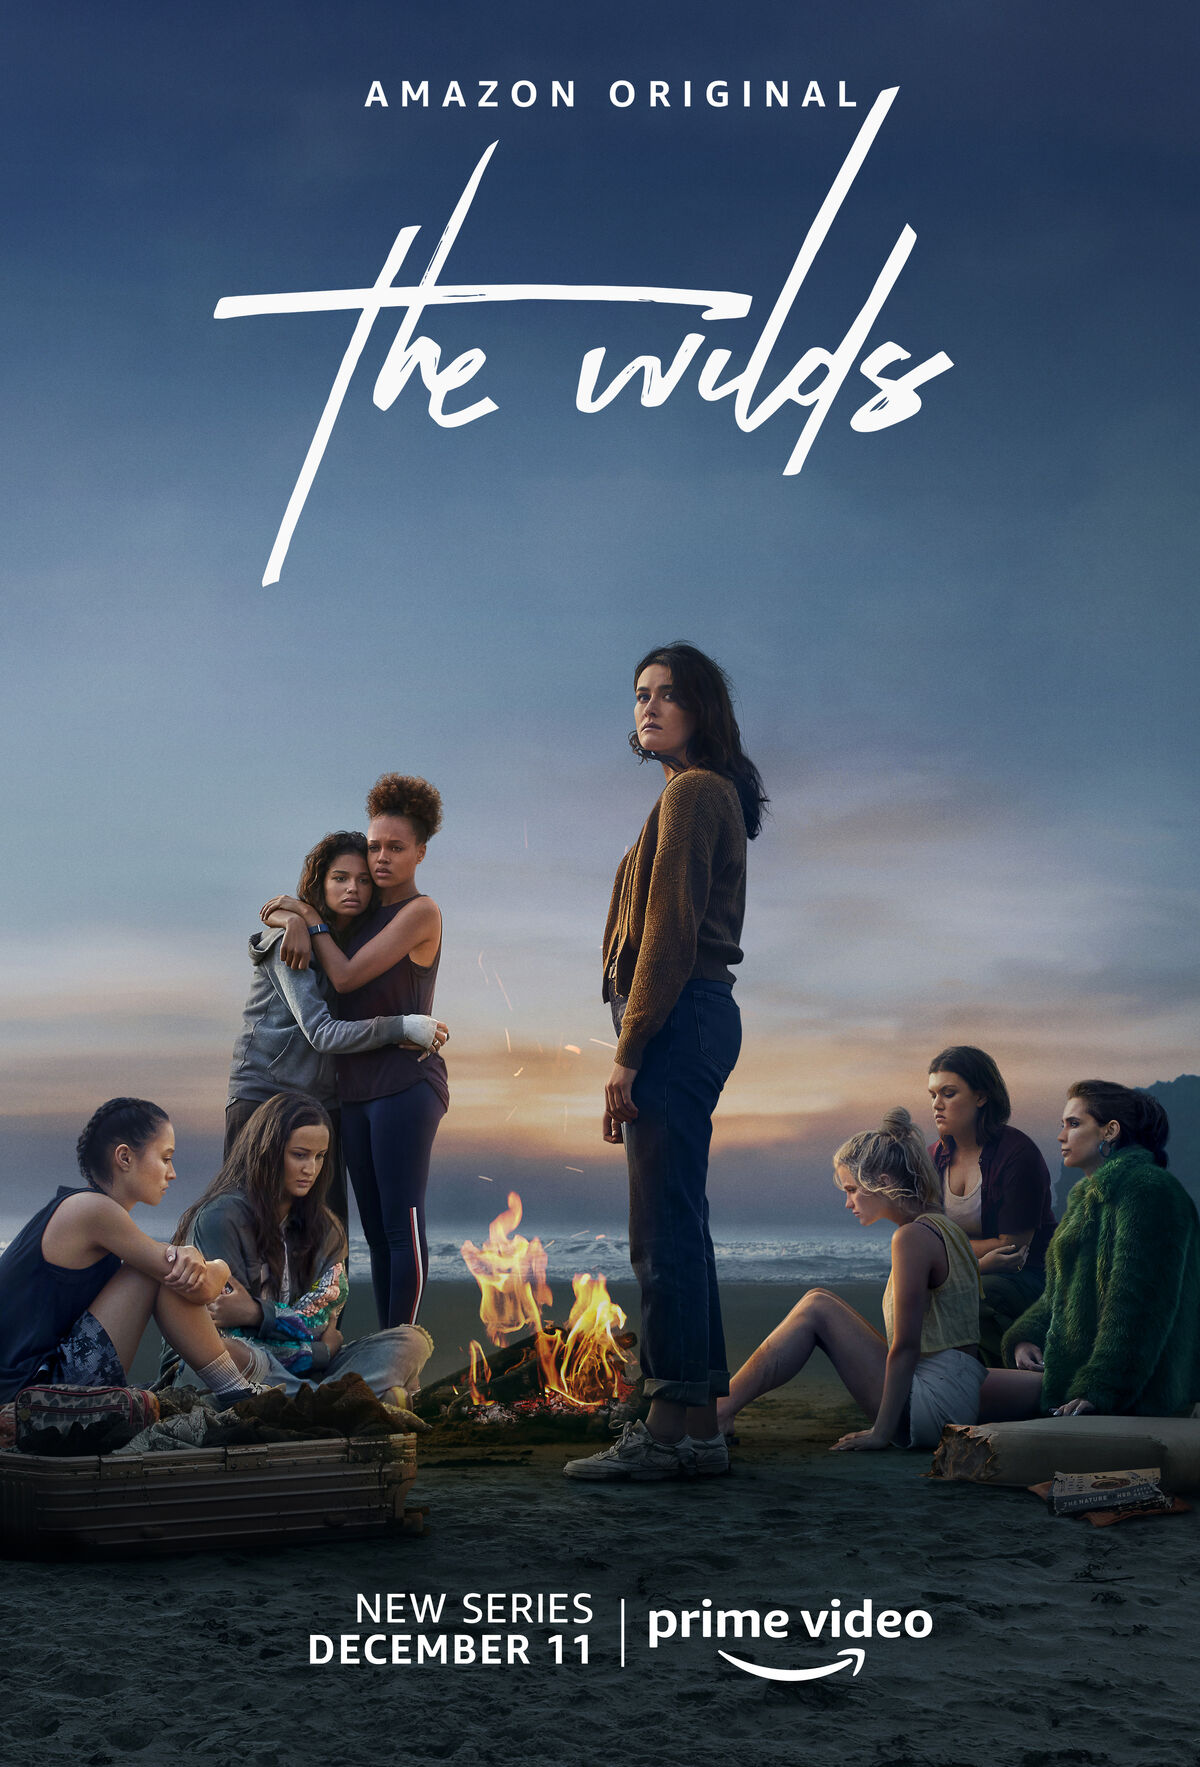 The Wilds (TV series) - Wikipedia